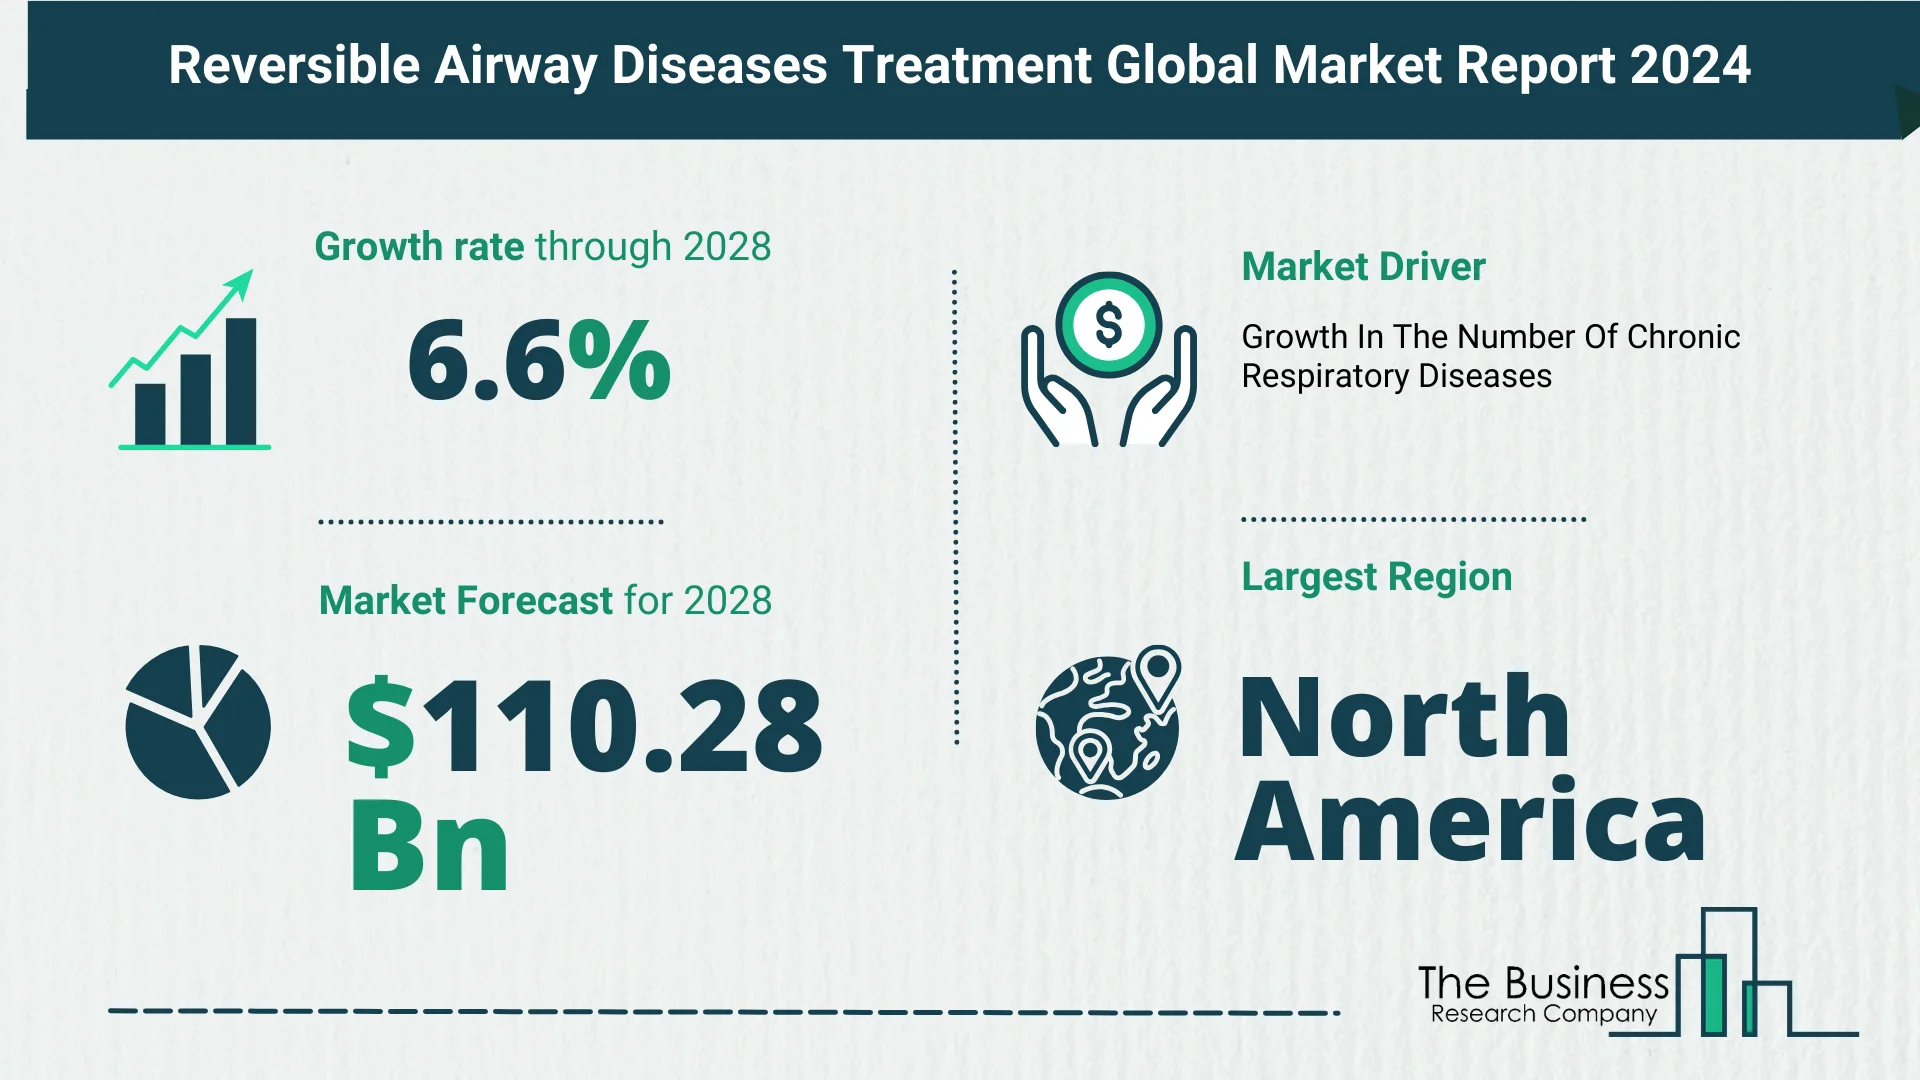 Global Reversible Airway Diseases Treatment Market Size